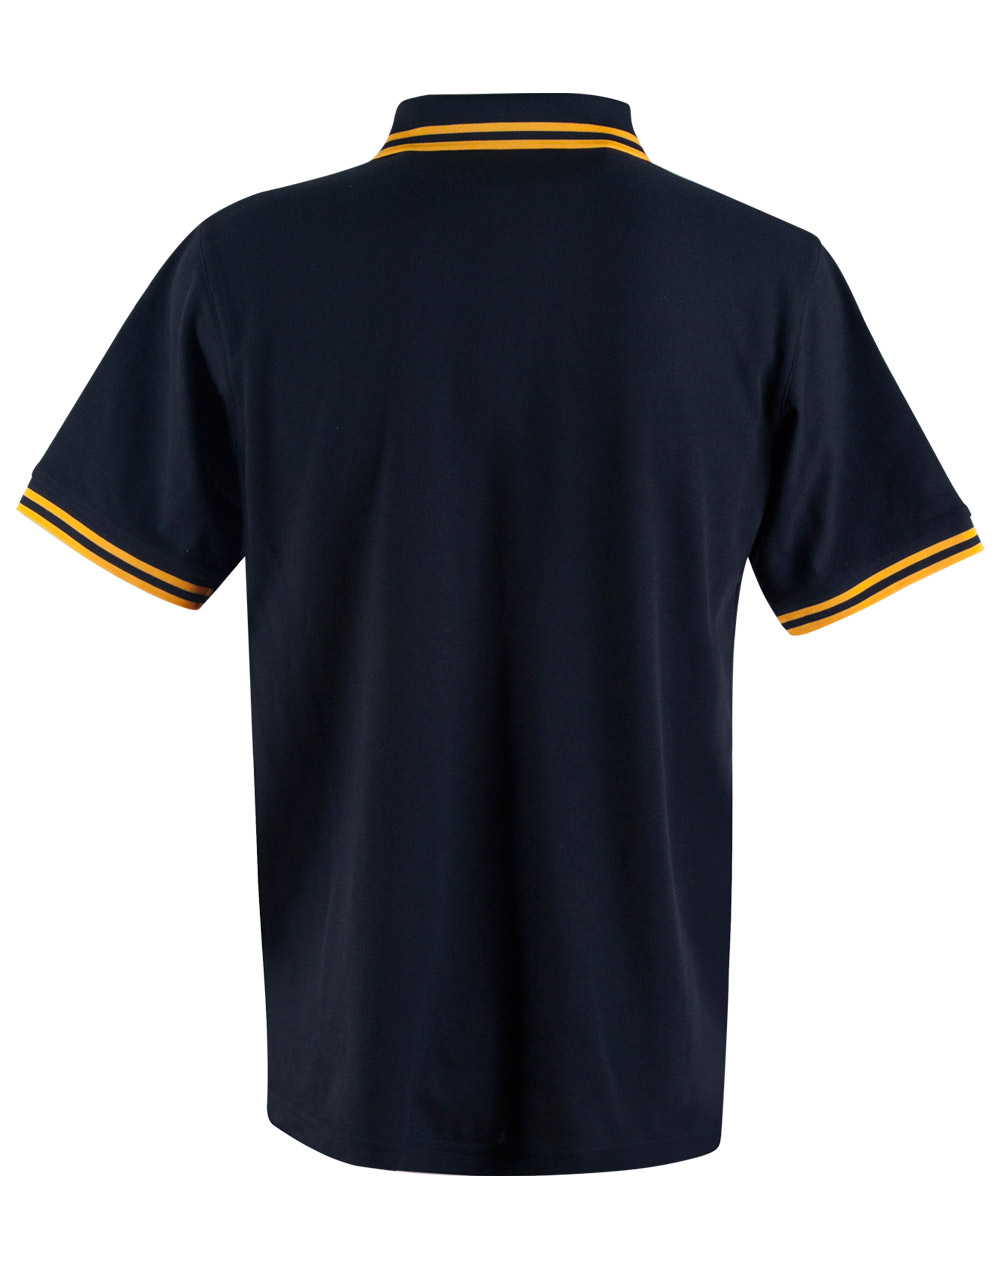 Custom Mens Black Gold Grace Pique Polo Shirt Online Perth Australia